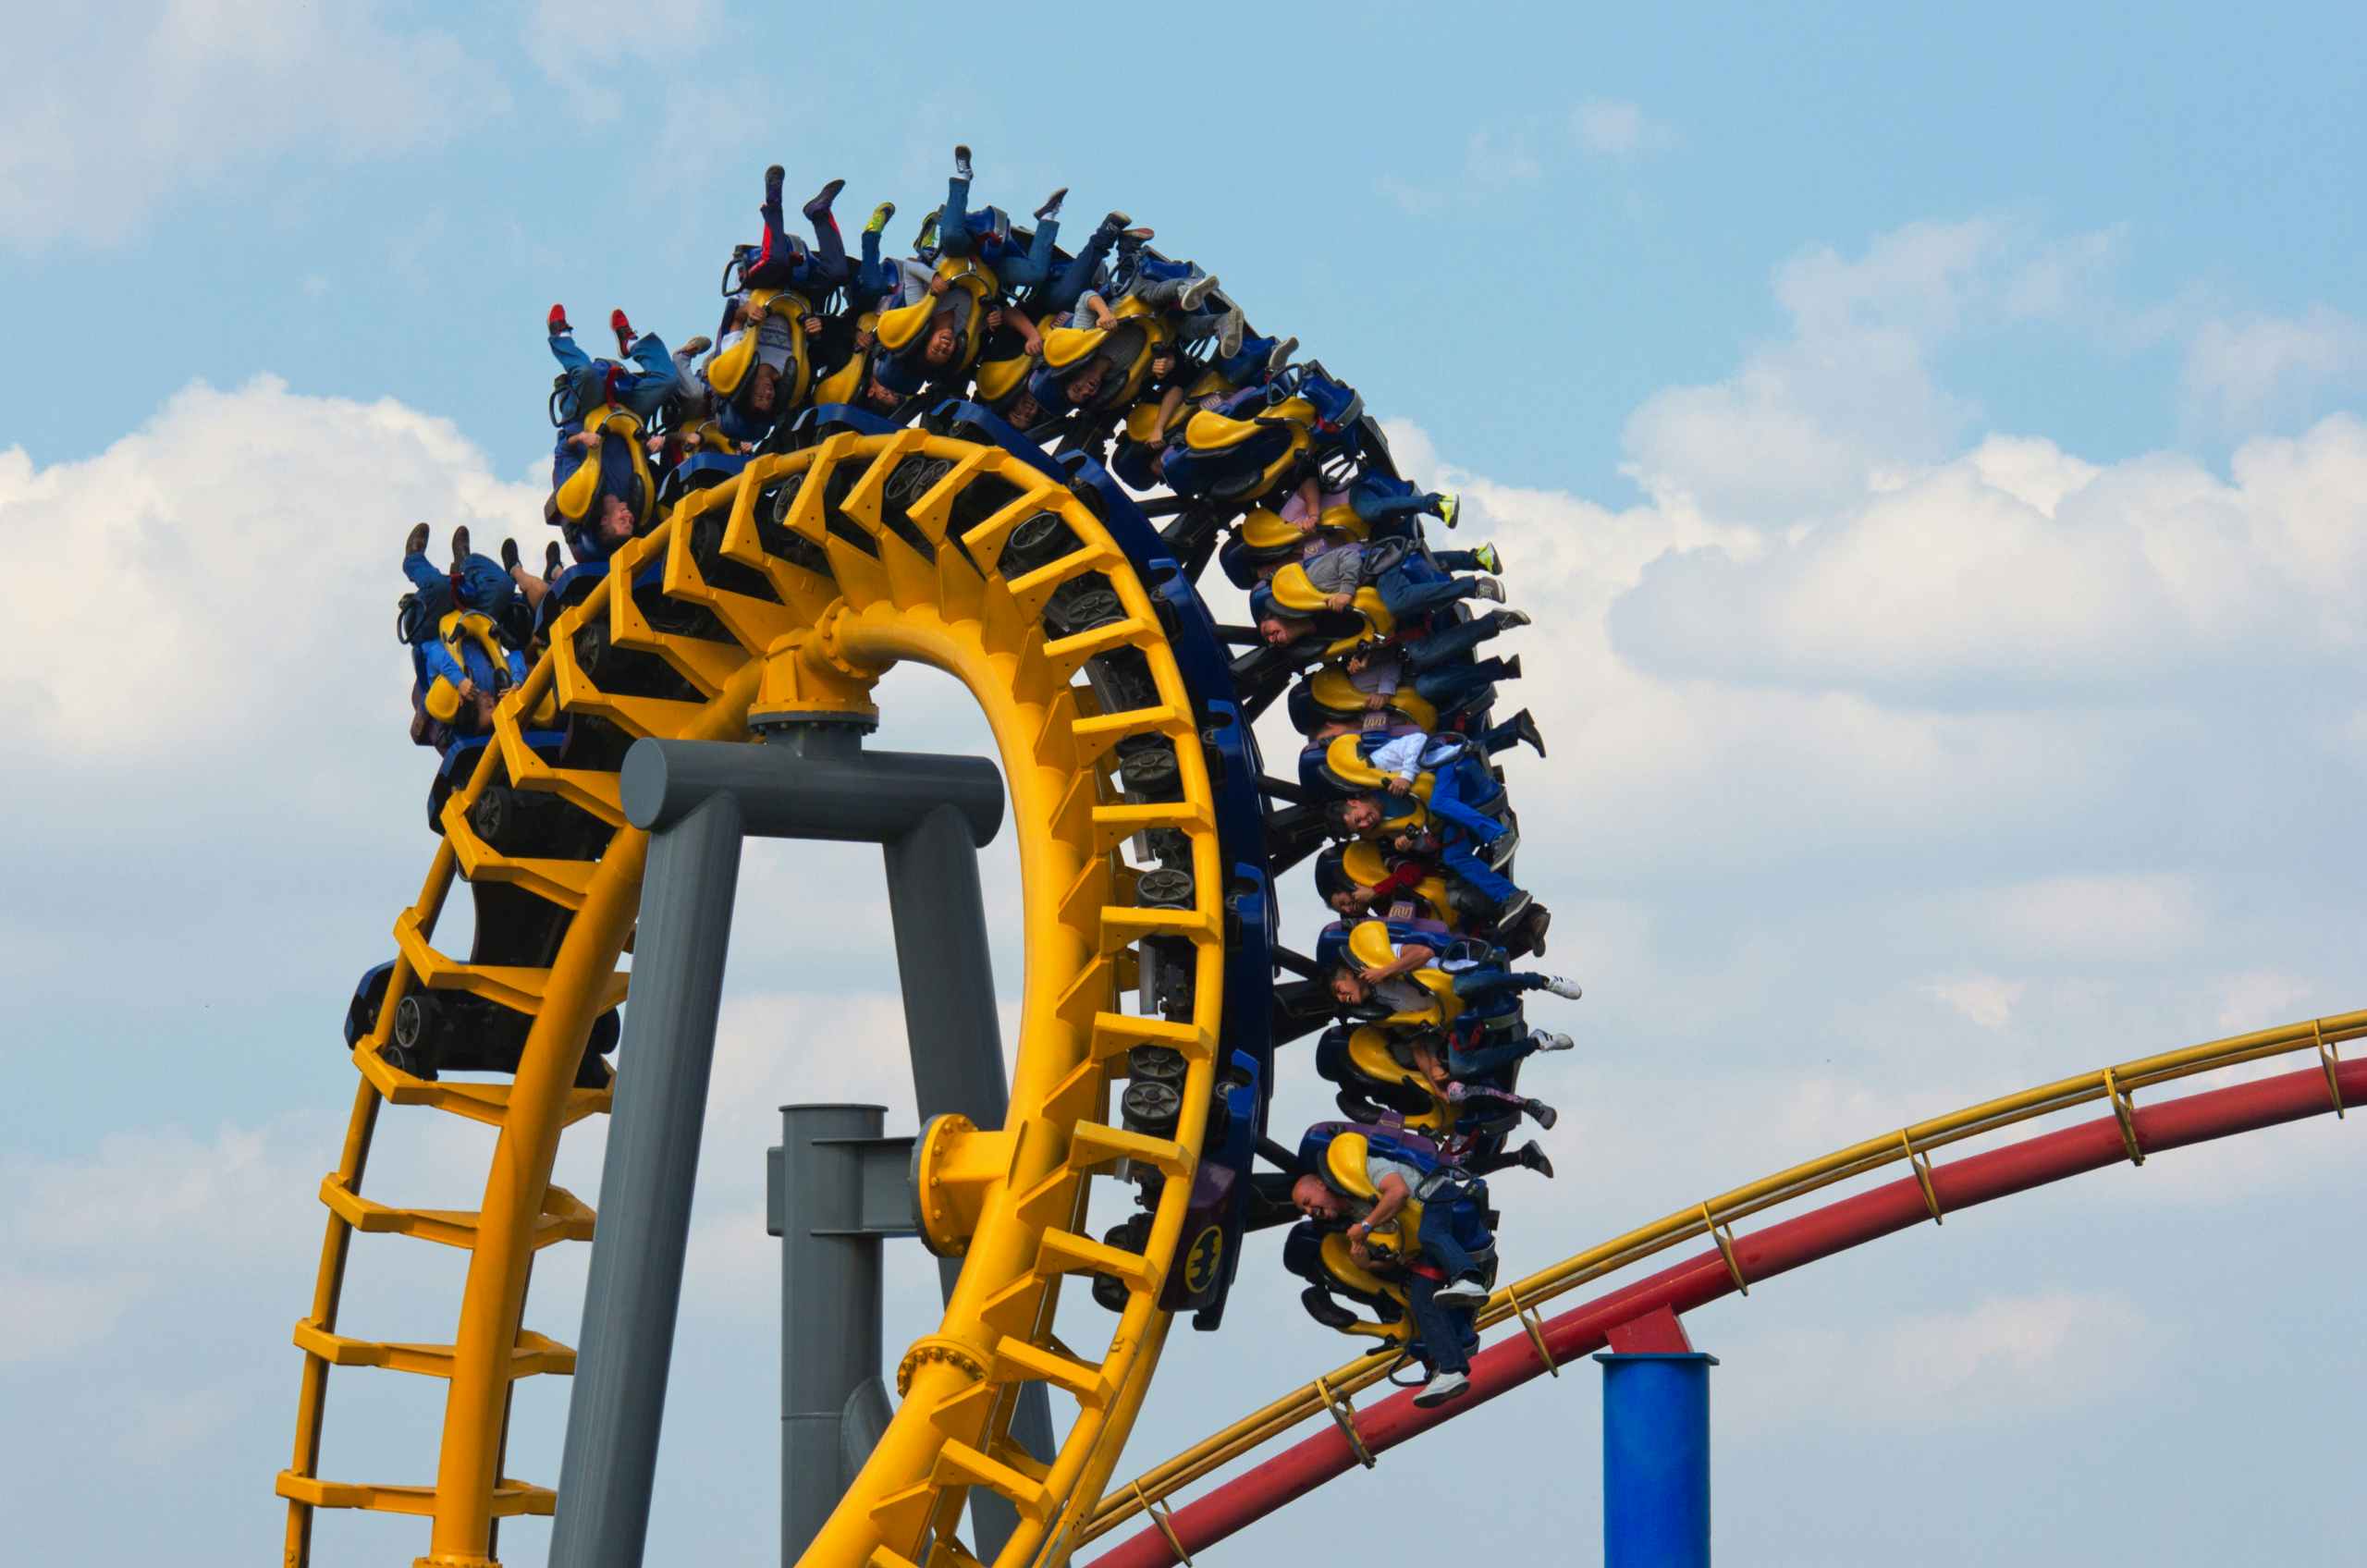 amusement park visitors on roller coaster ride